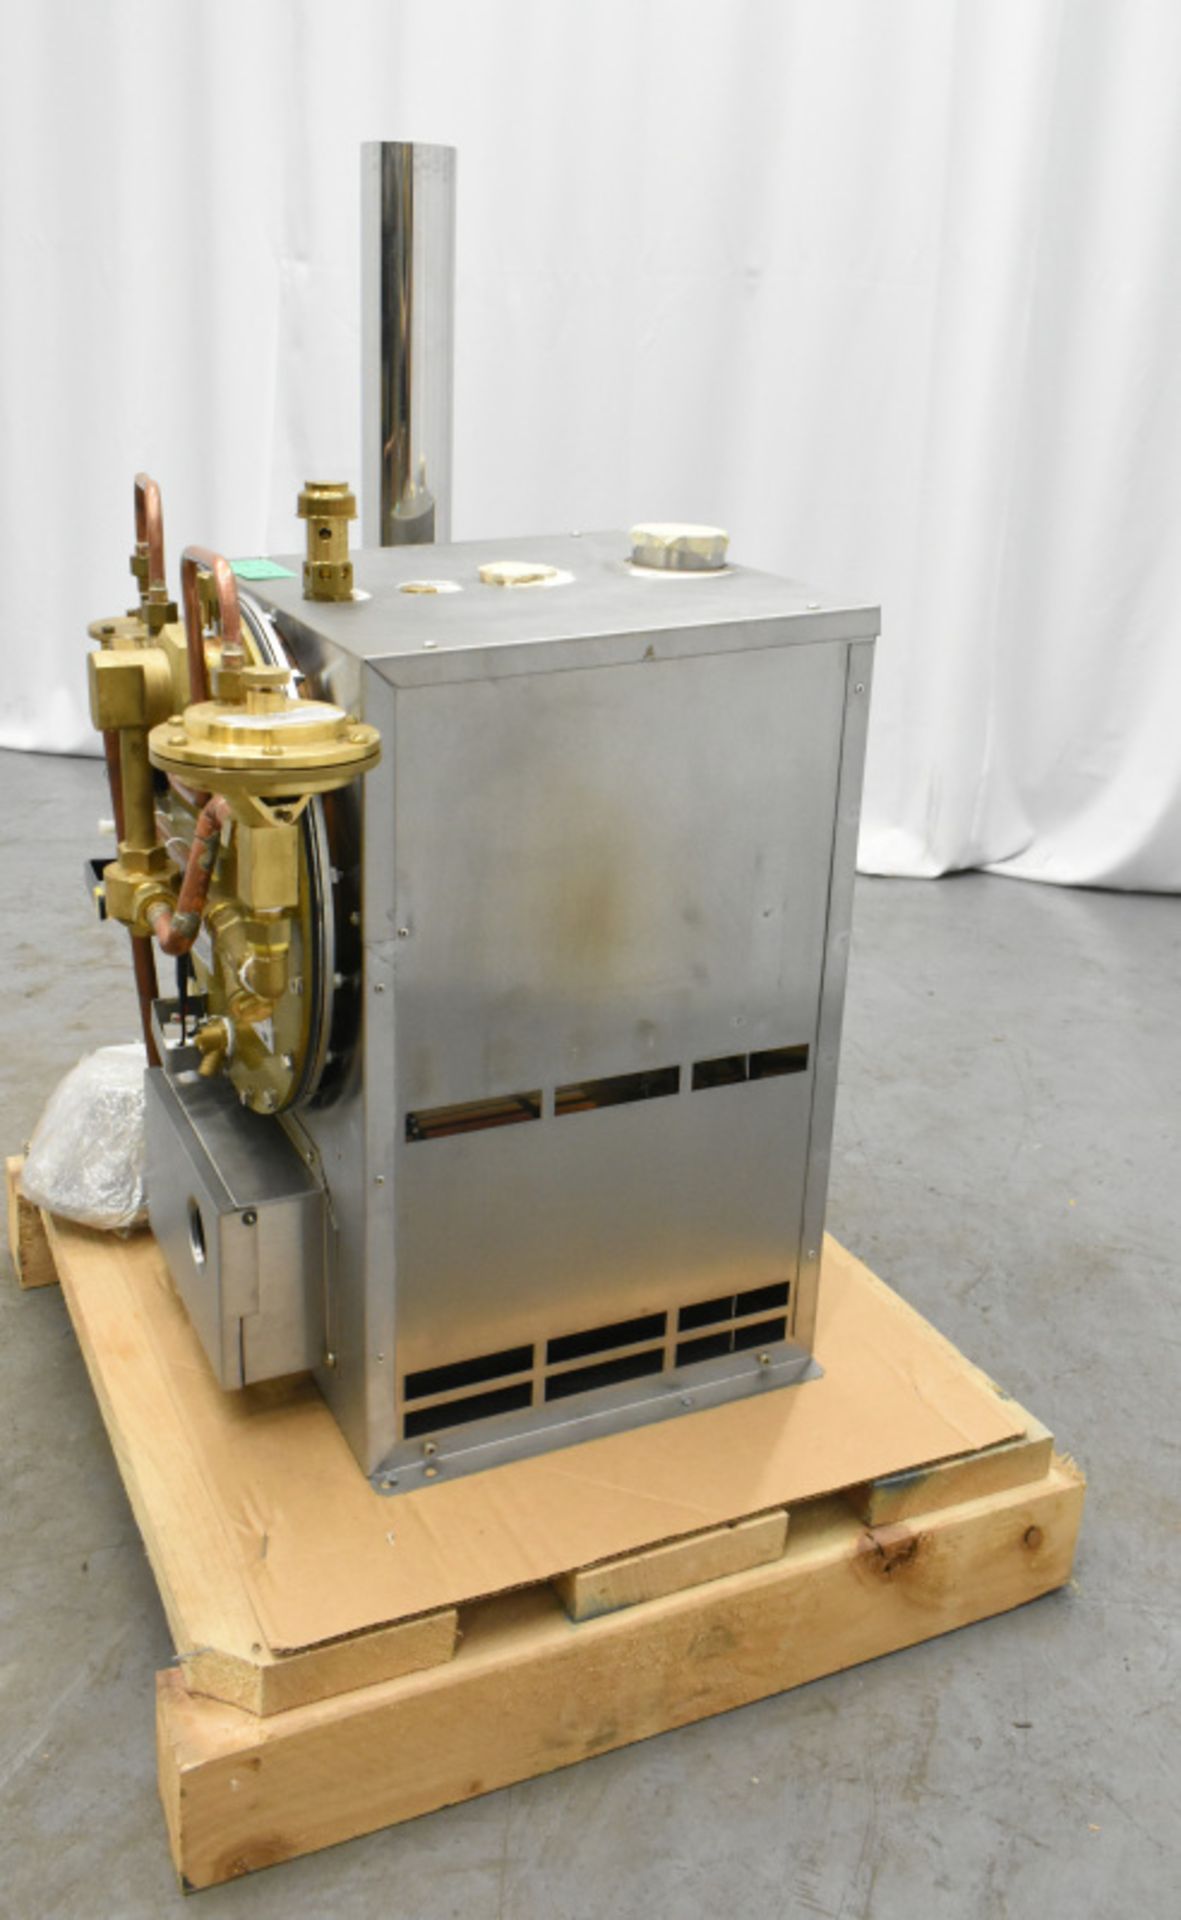 Hobart Pressure Water Boiler - Model BRG200-10 - Image 5 of 13